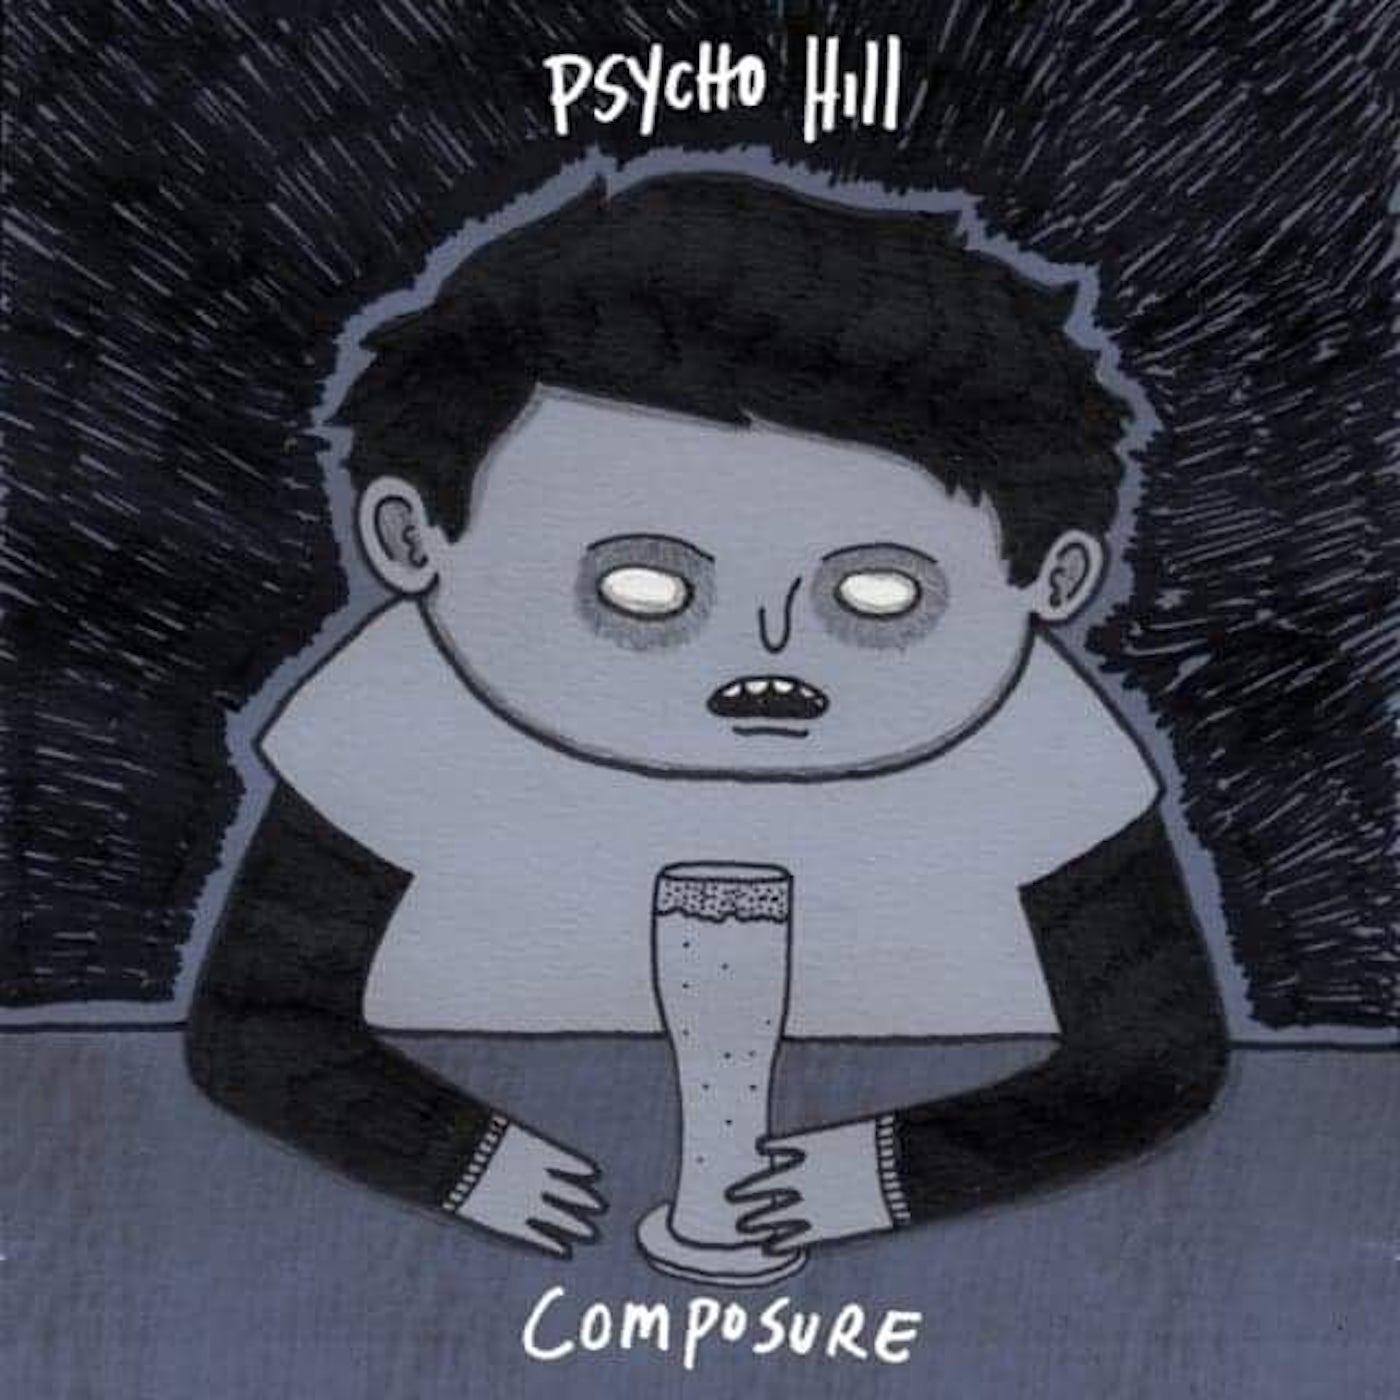 Psycho Hill - Composure (EP) (2020)